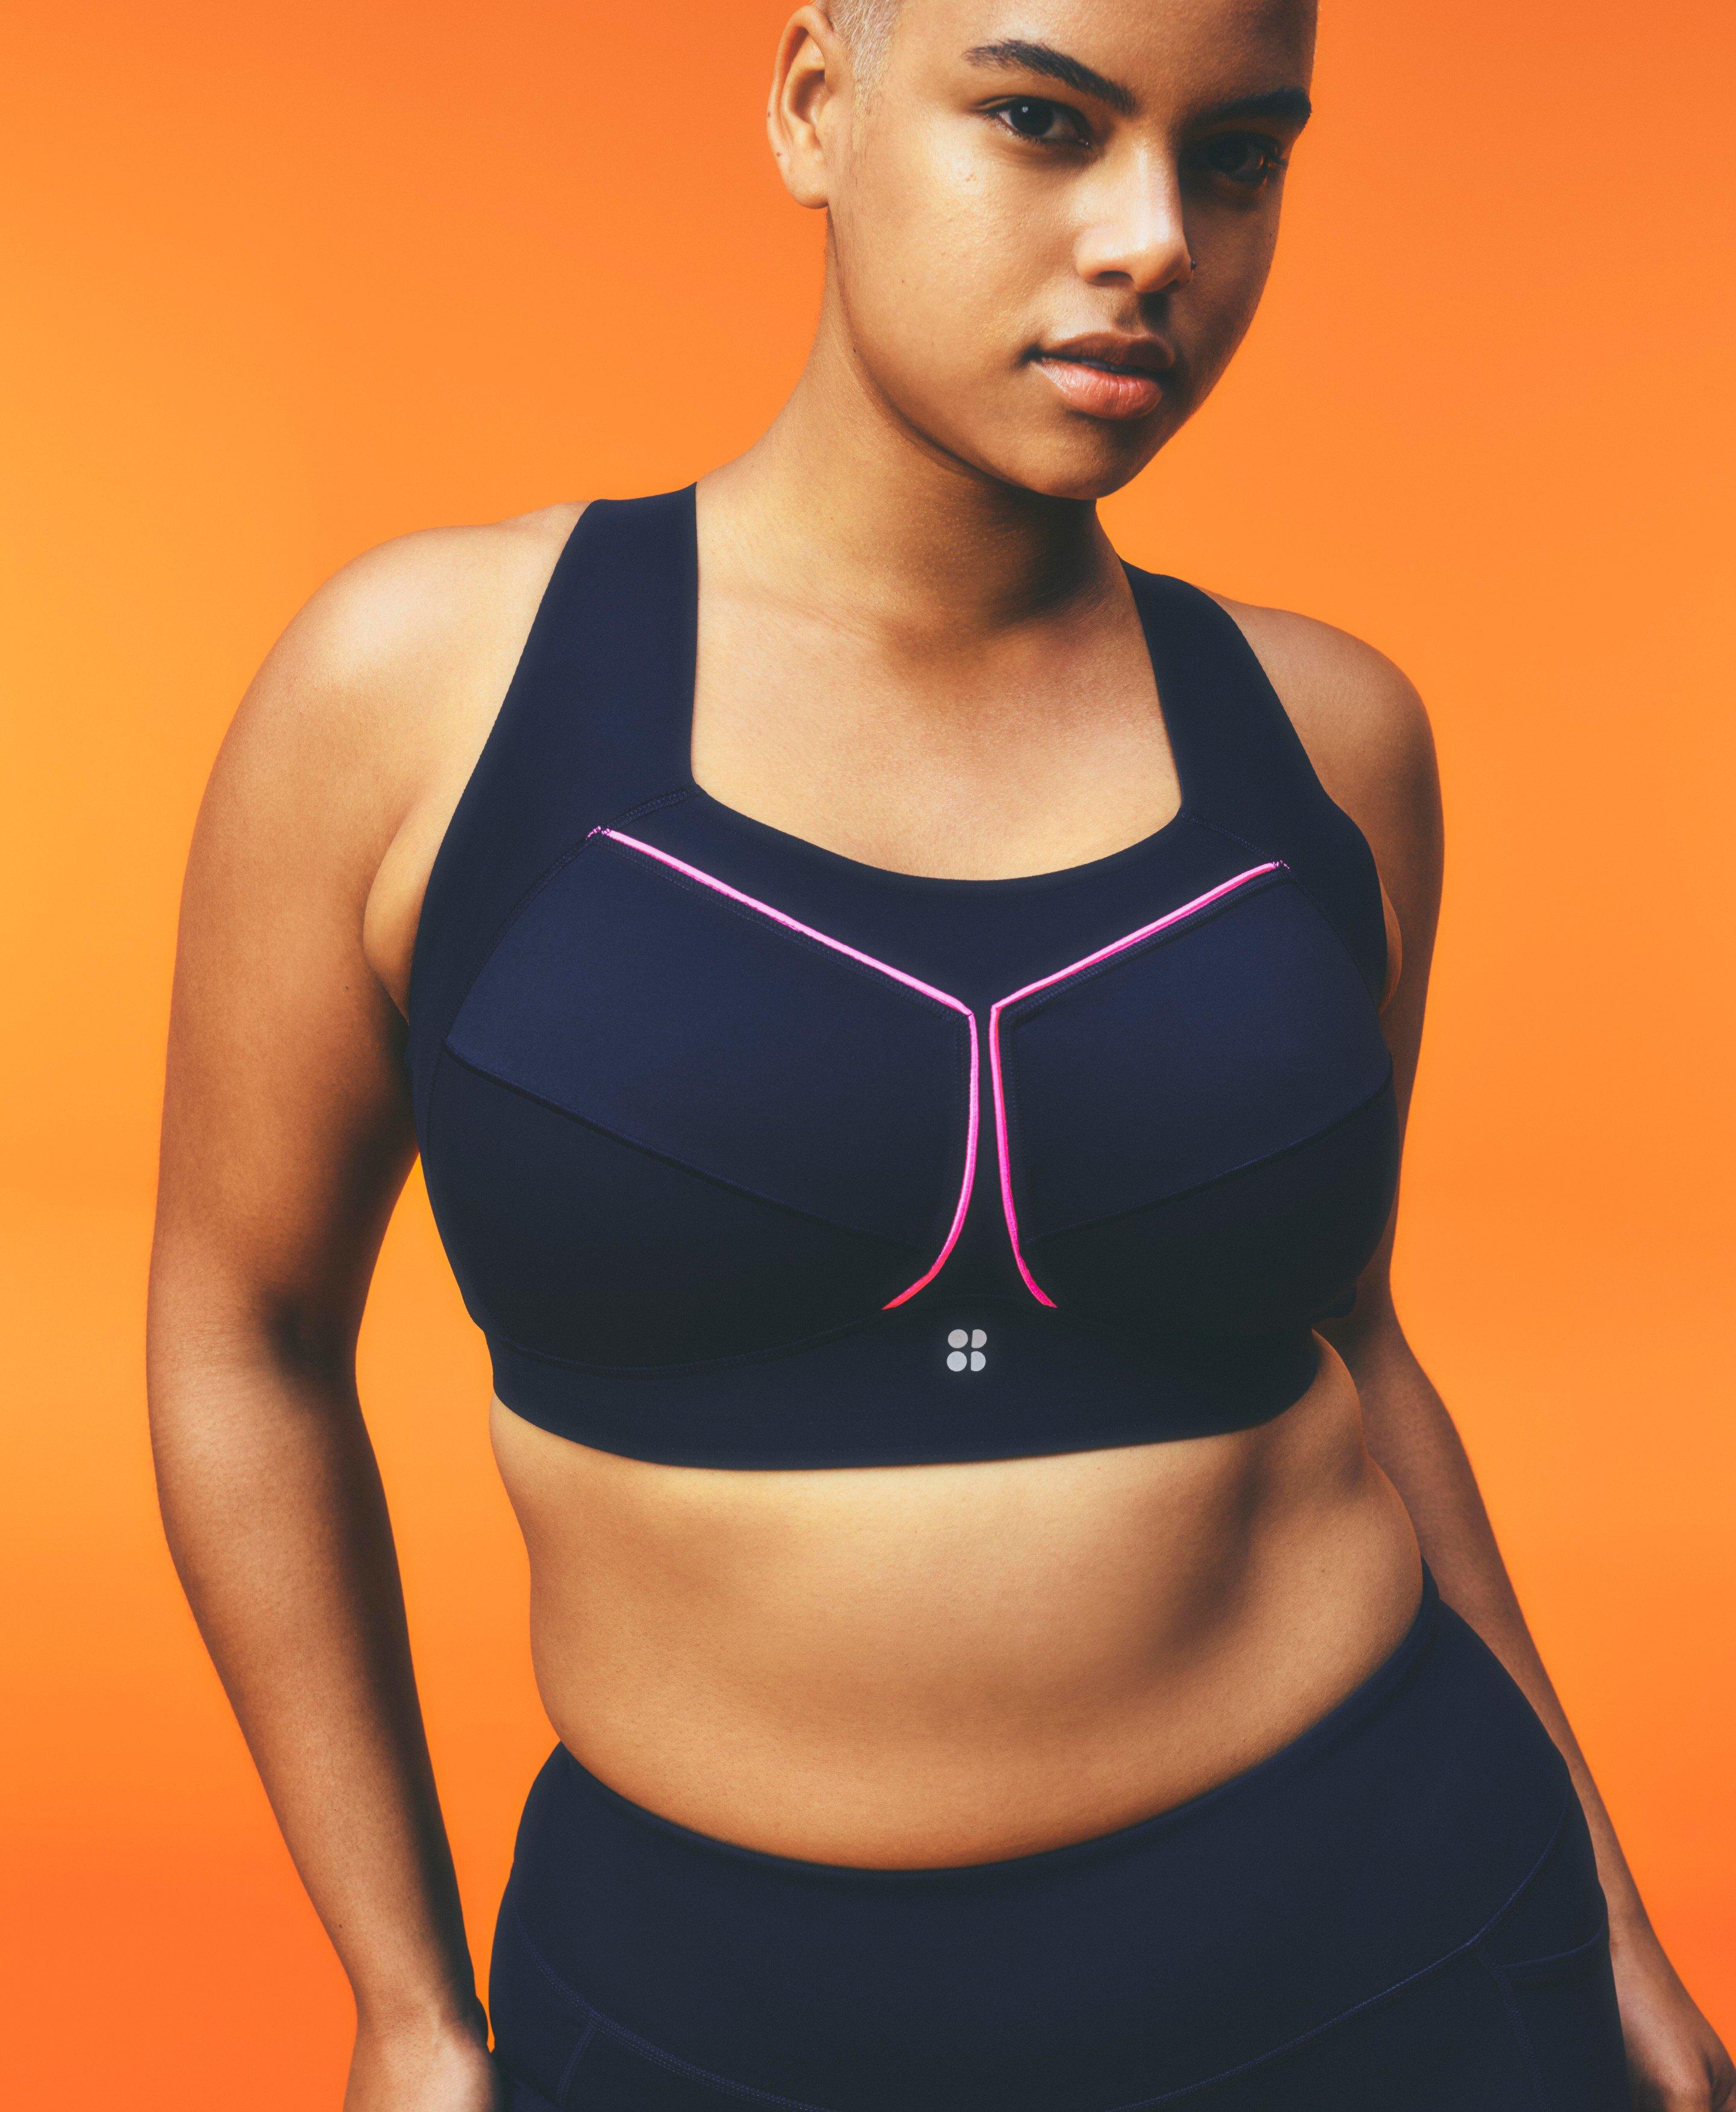 UIFLQXX Sports Women Bra Sexy Size Yoga Fitness Exercise Underwear